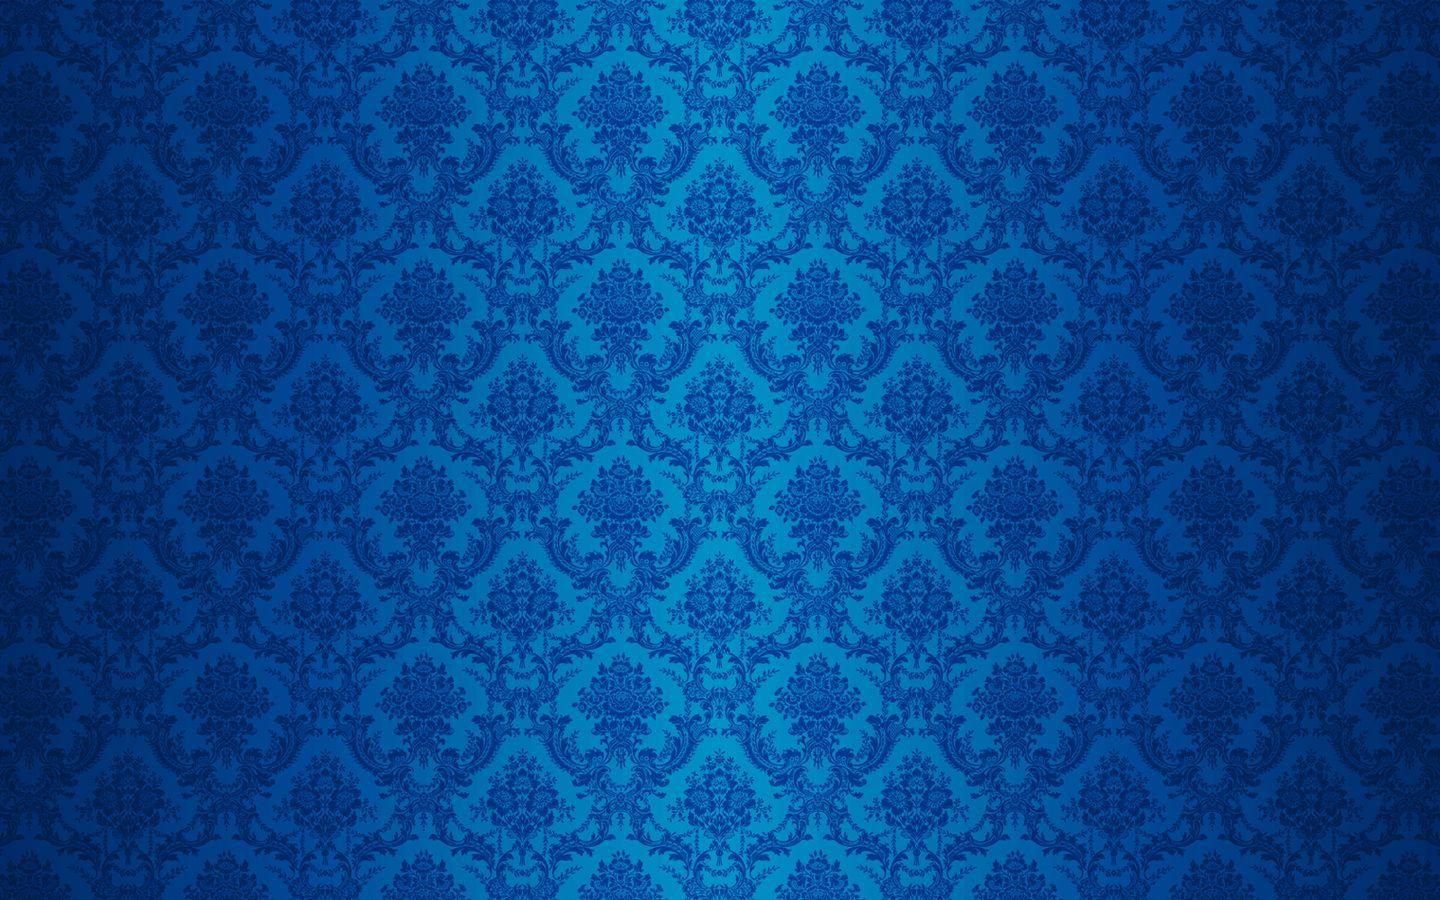 Google Image Result for  httpblackbeltmamacomphotosuncategorized2008090  Blue and white  wallpaper Blue floral wallpaper Royal blue wallpaper